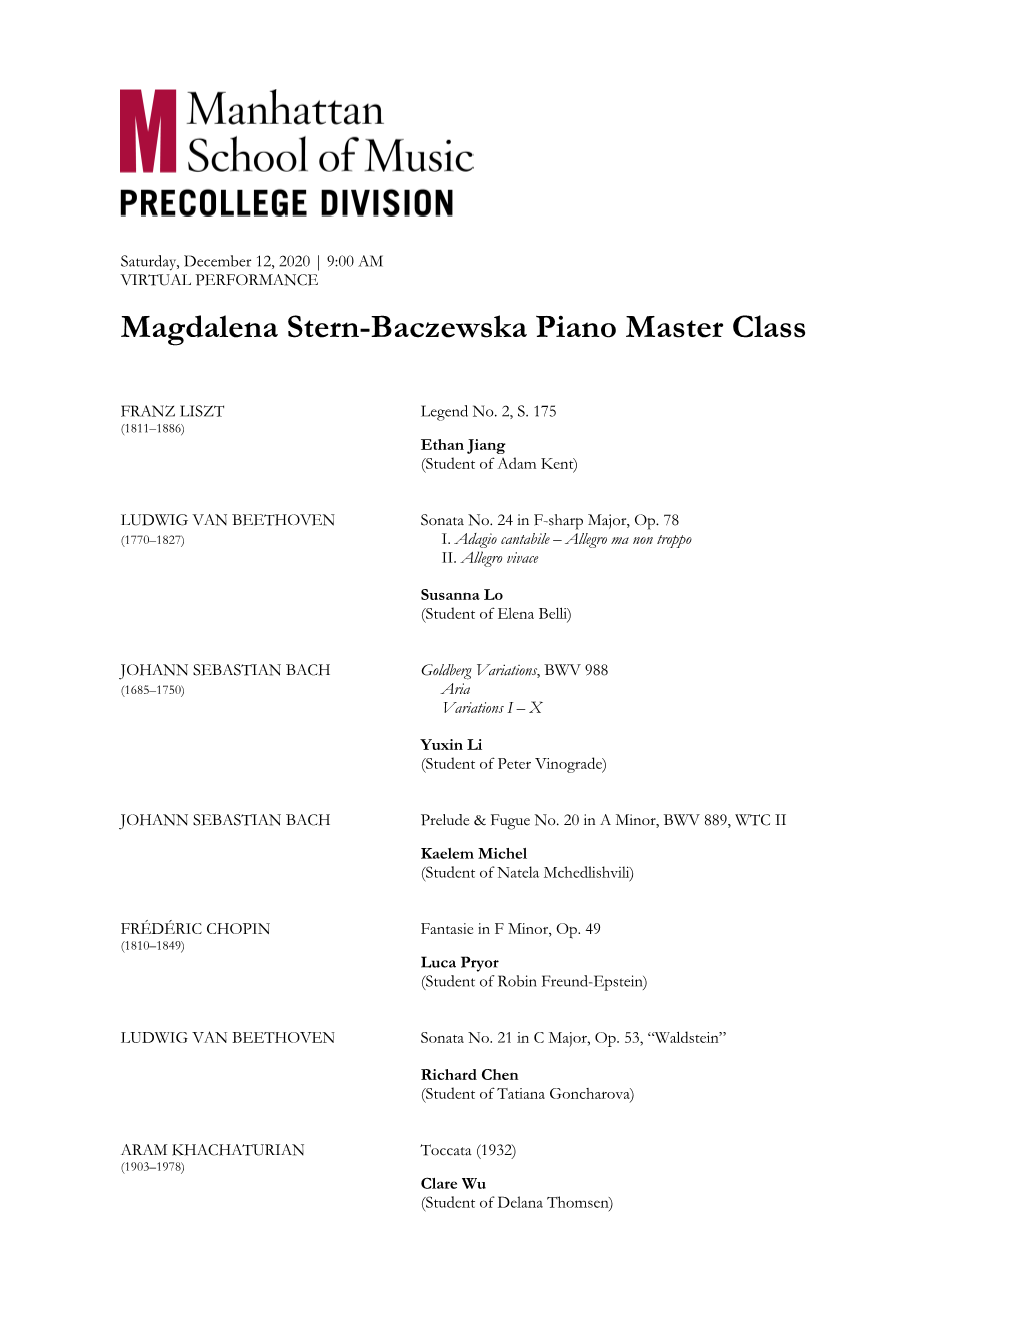 Magdalena Stern-Baczewska Piano Master Class